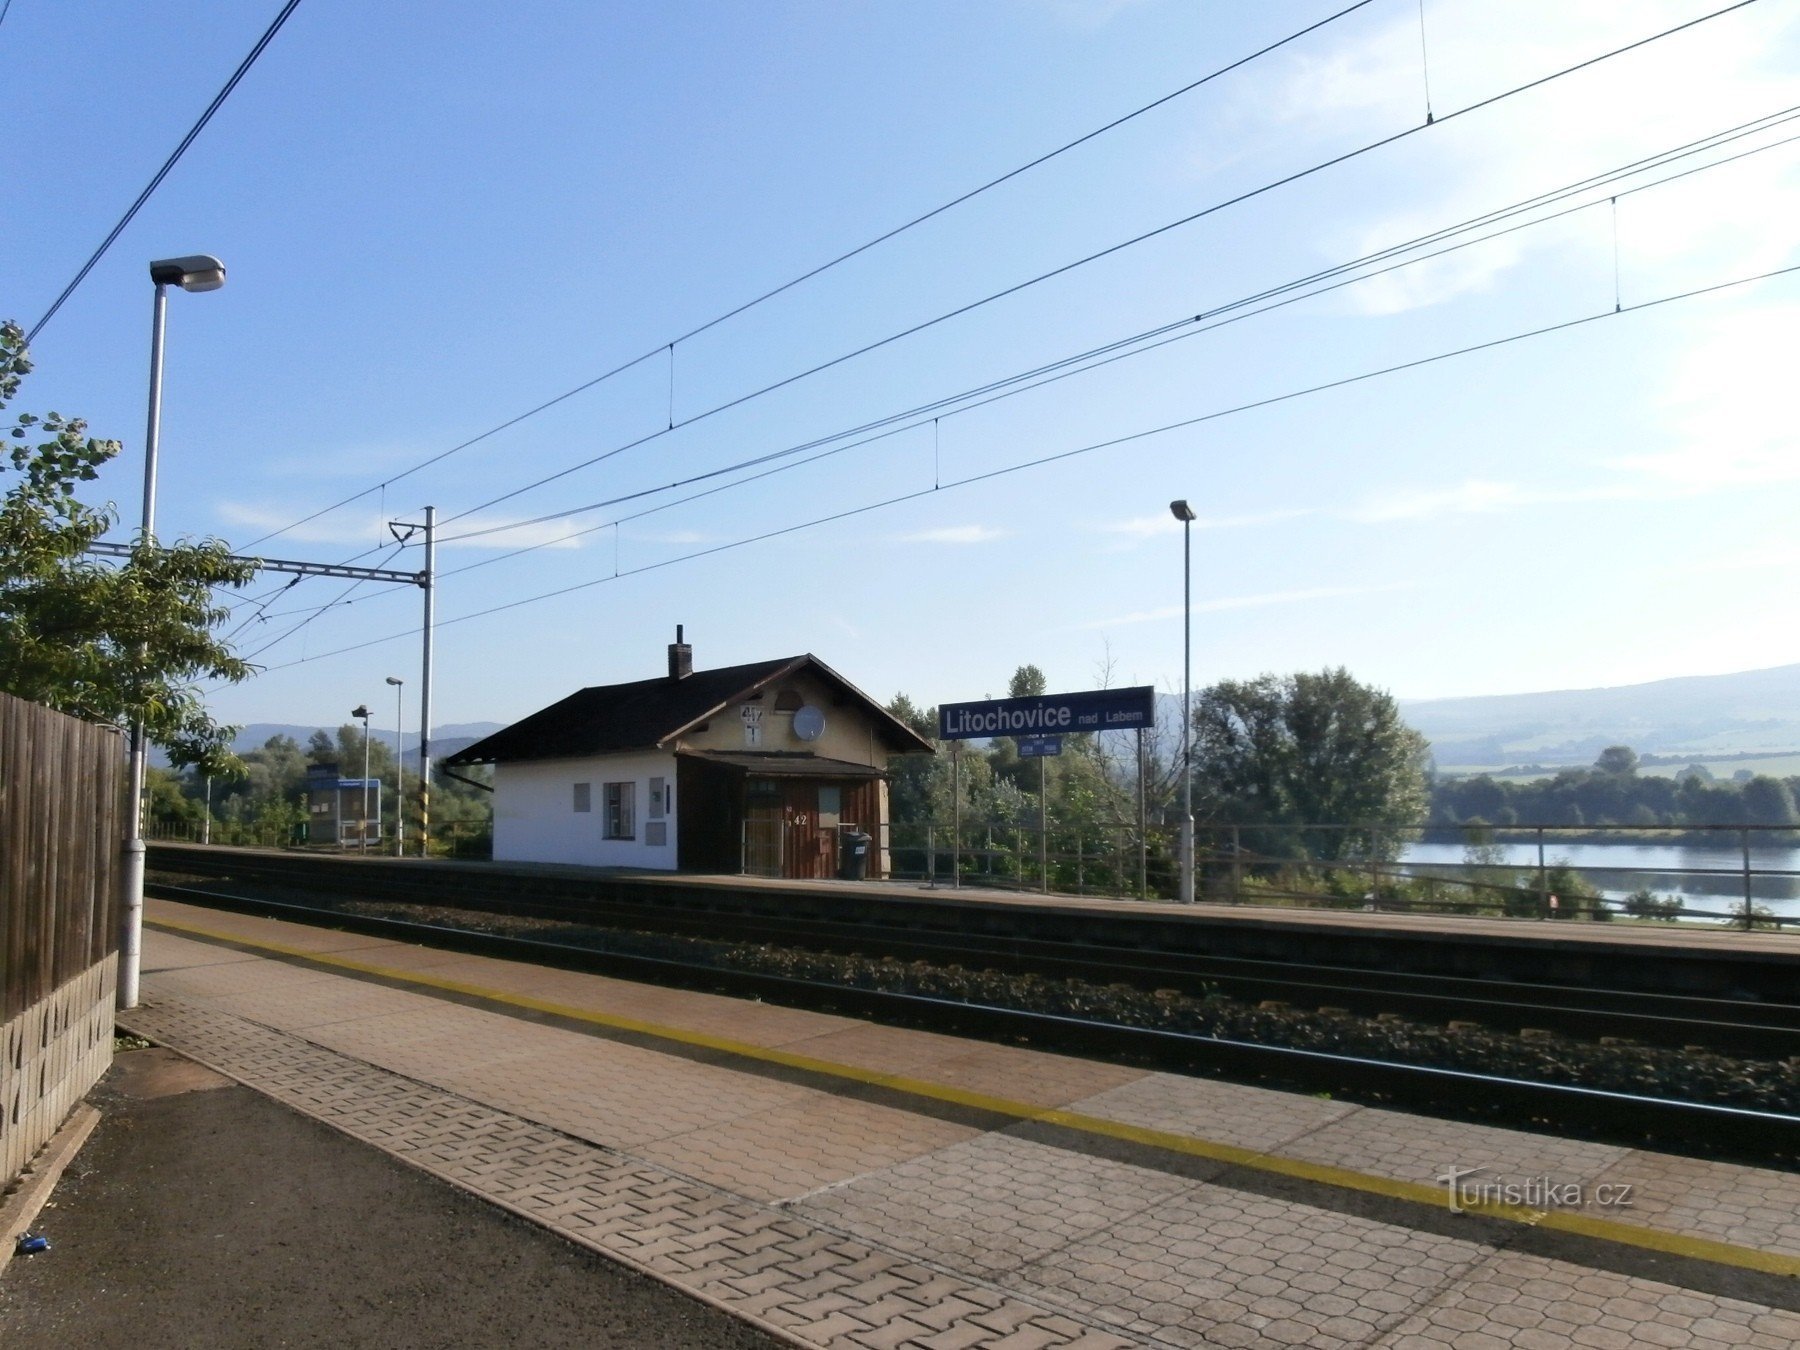 1. Trạm dừng xe lửa Litochovice nad Labem